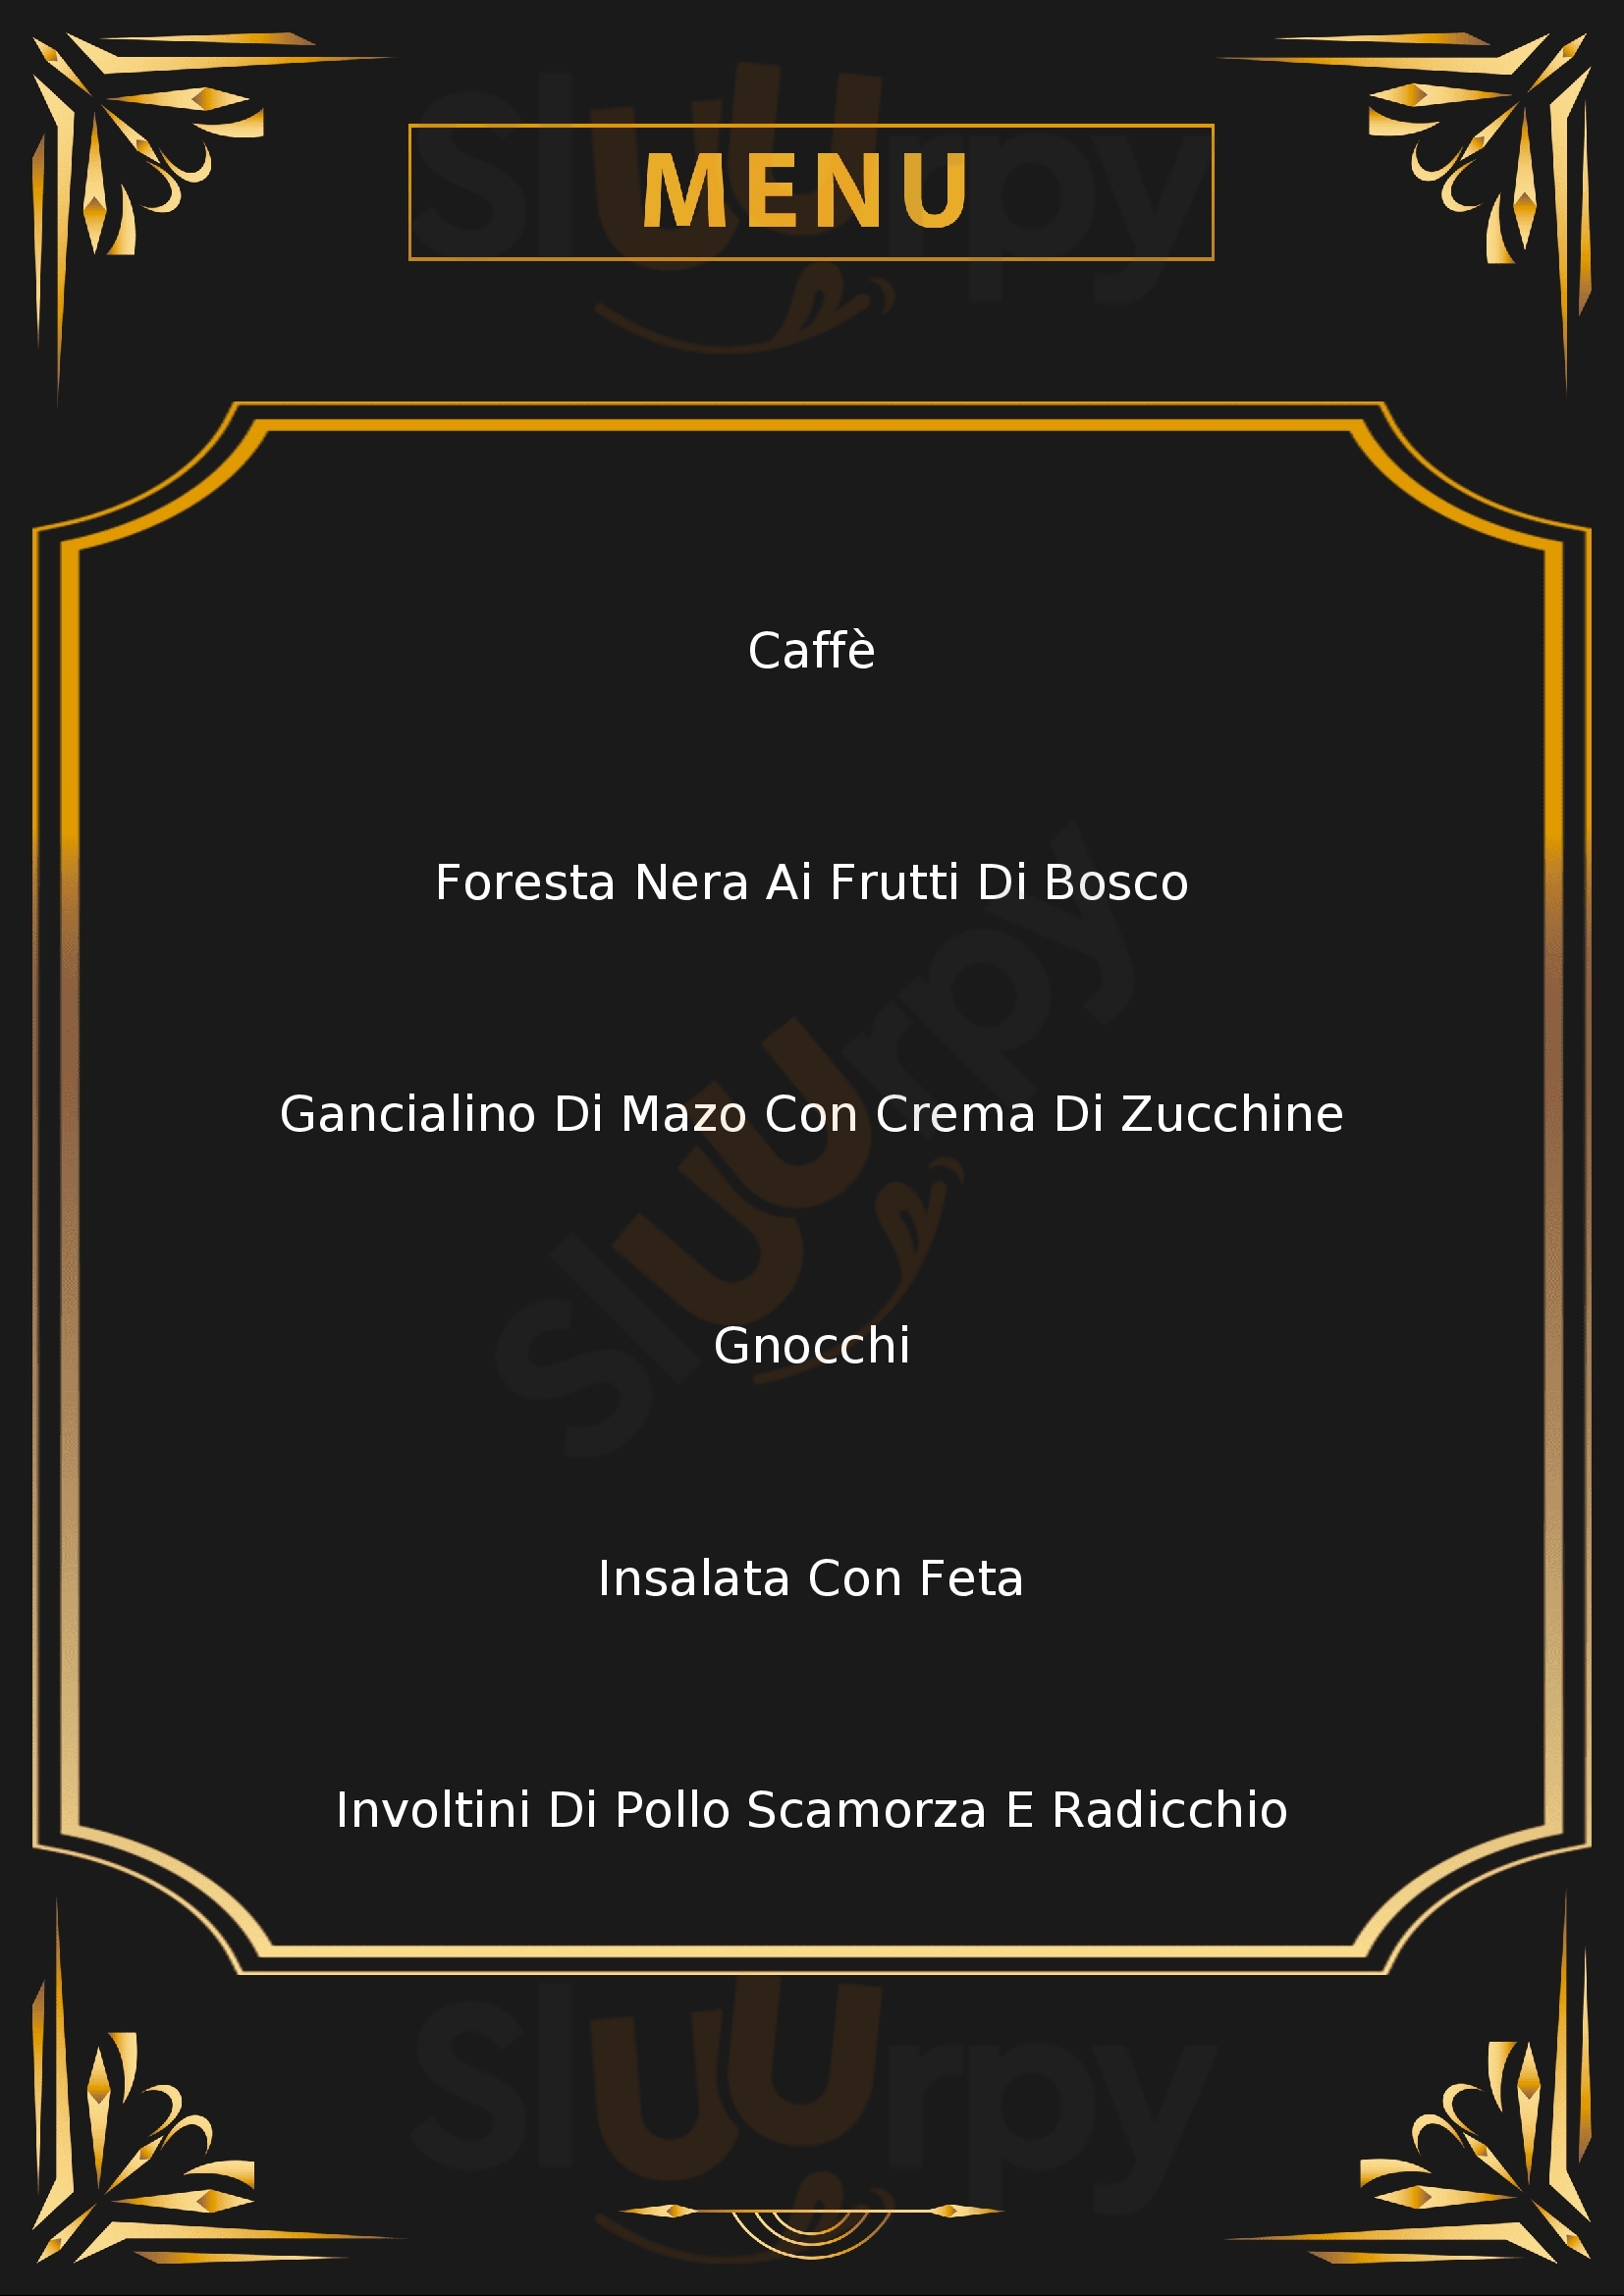 Gran Caffè Modena menù 1 pagina